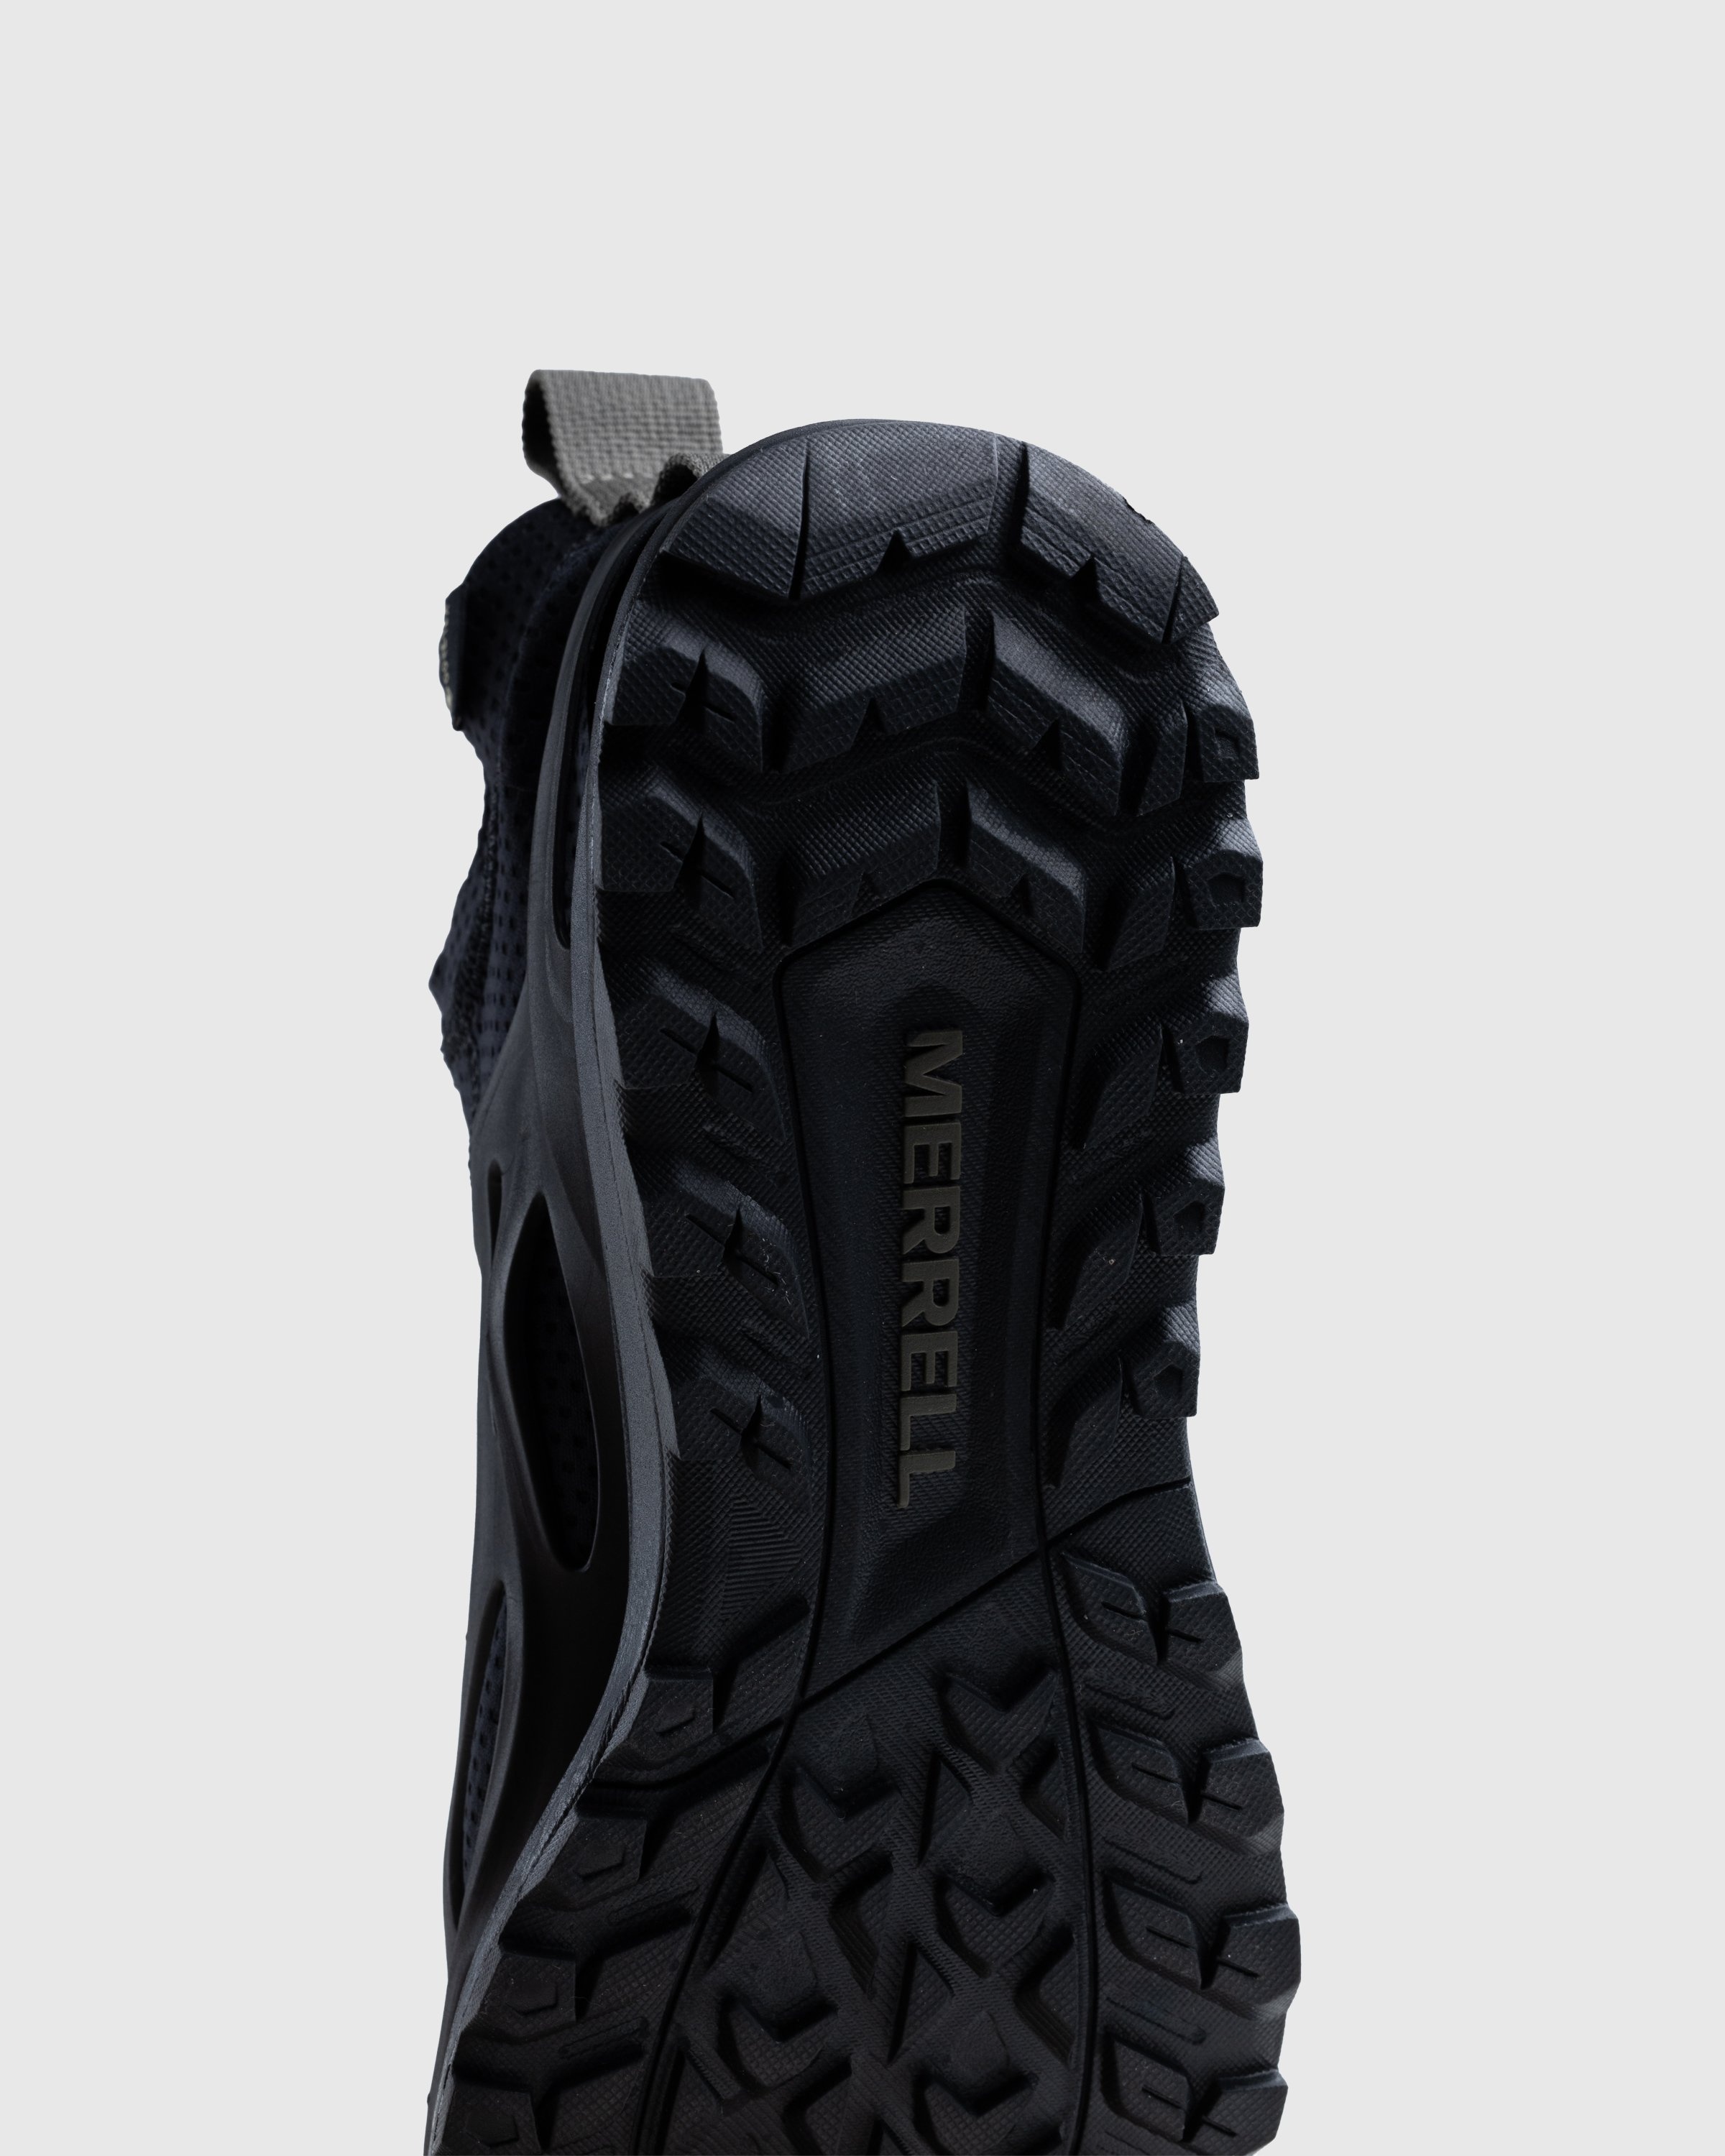 Merrell – Hydro Runner Mid GTX Black  - Sneakers - Black - Image 6